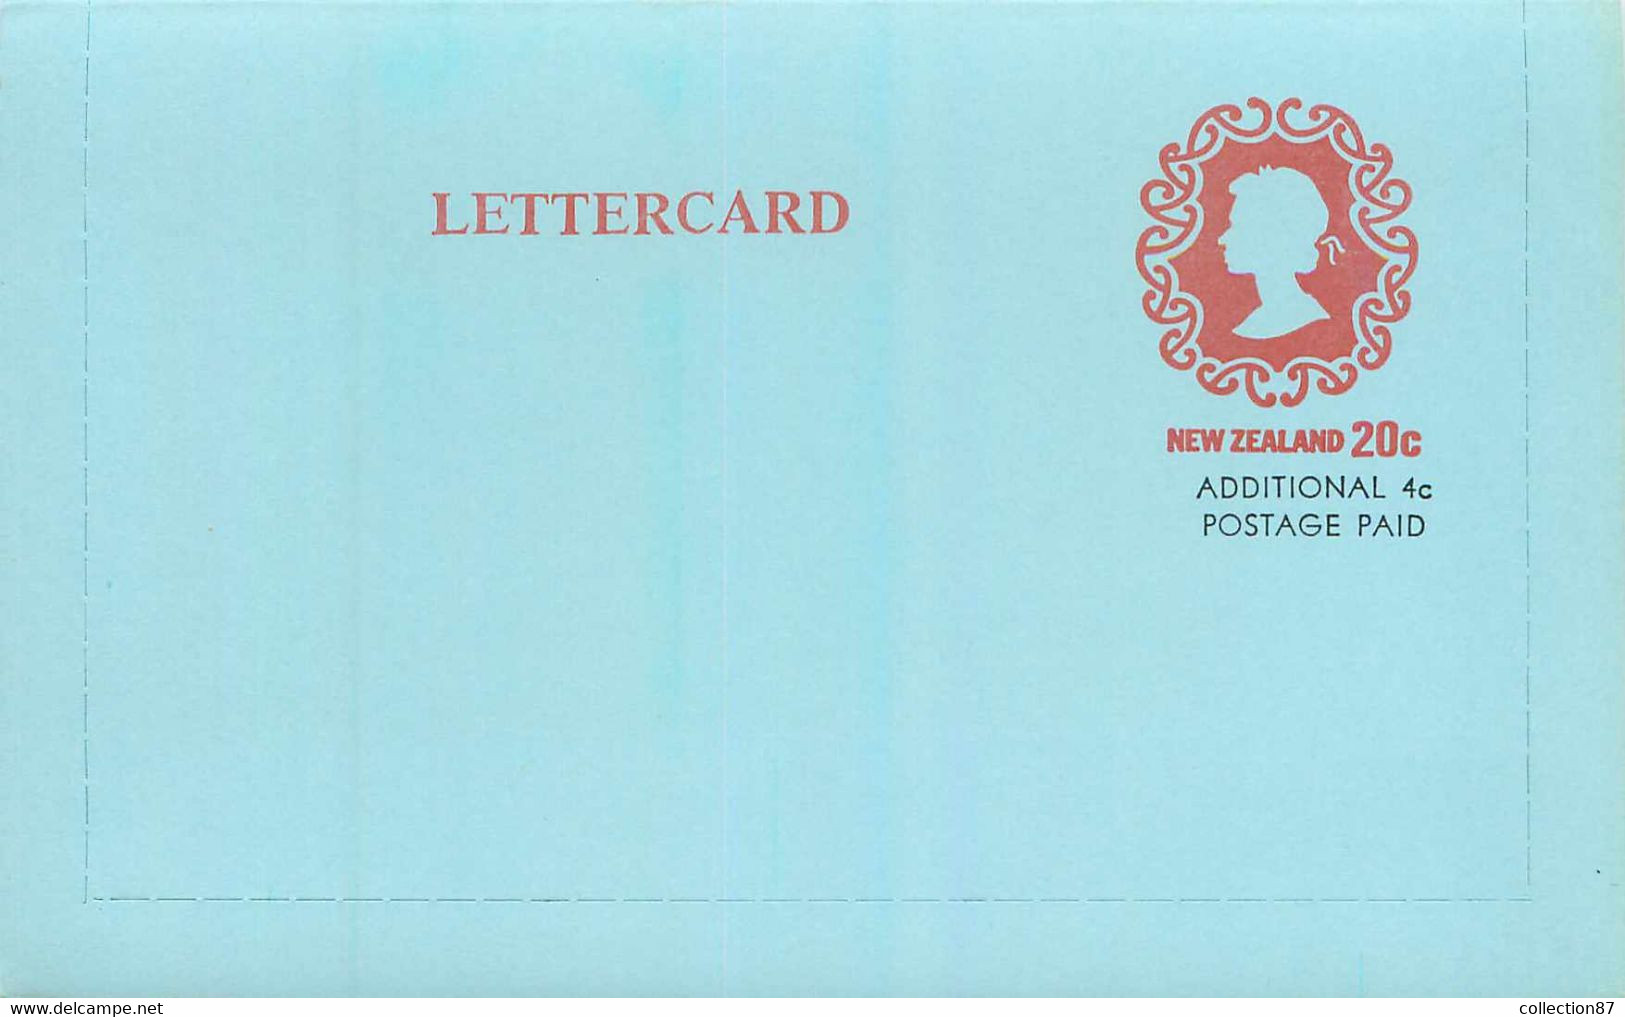 NEW ZEALAND - LETTERCARD 20c Additional 4c Postage Paid < ENTIER POSTAL NOUVELLE ZELANDE 20c + 4 Cent - QUEEN ELISABETH - Enteros Postales